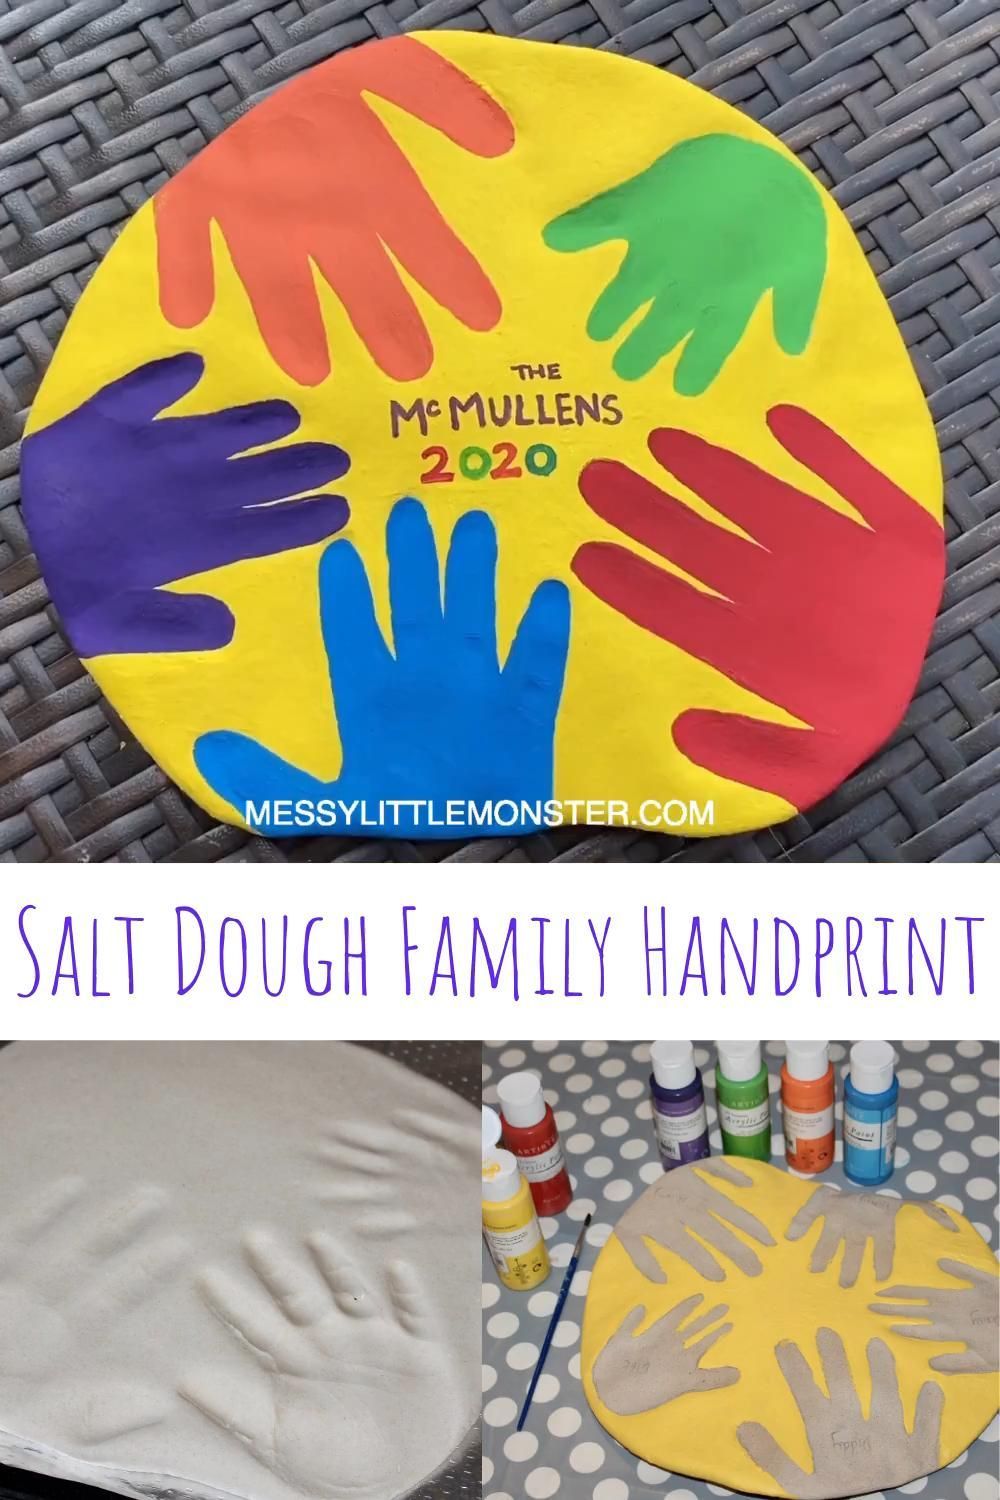 SALT DOUGH FAMILY HANDPRINTS -   19 holiday Art salt dough ideas